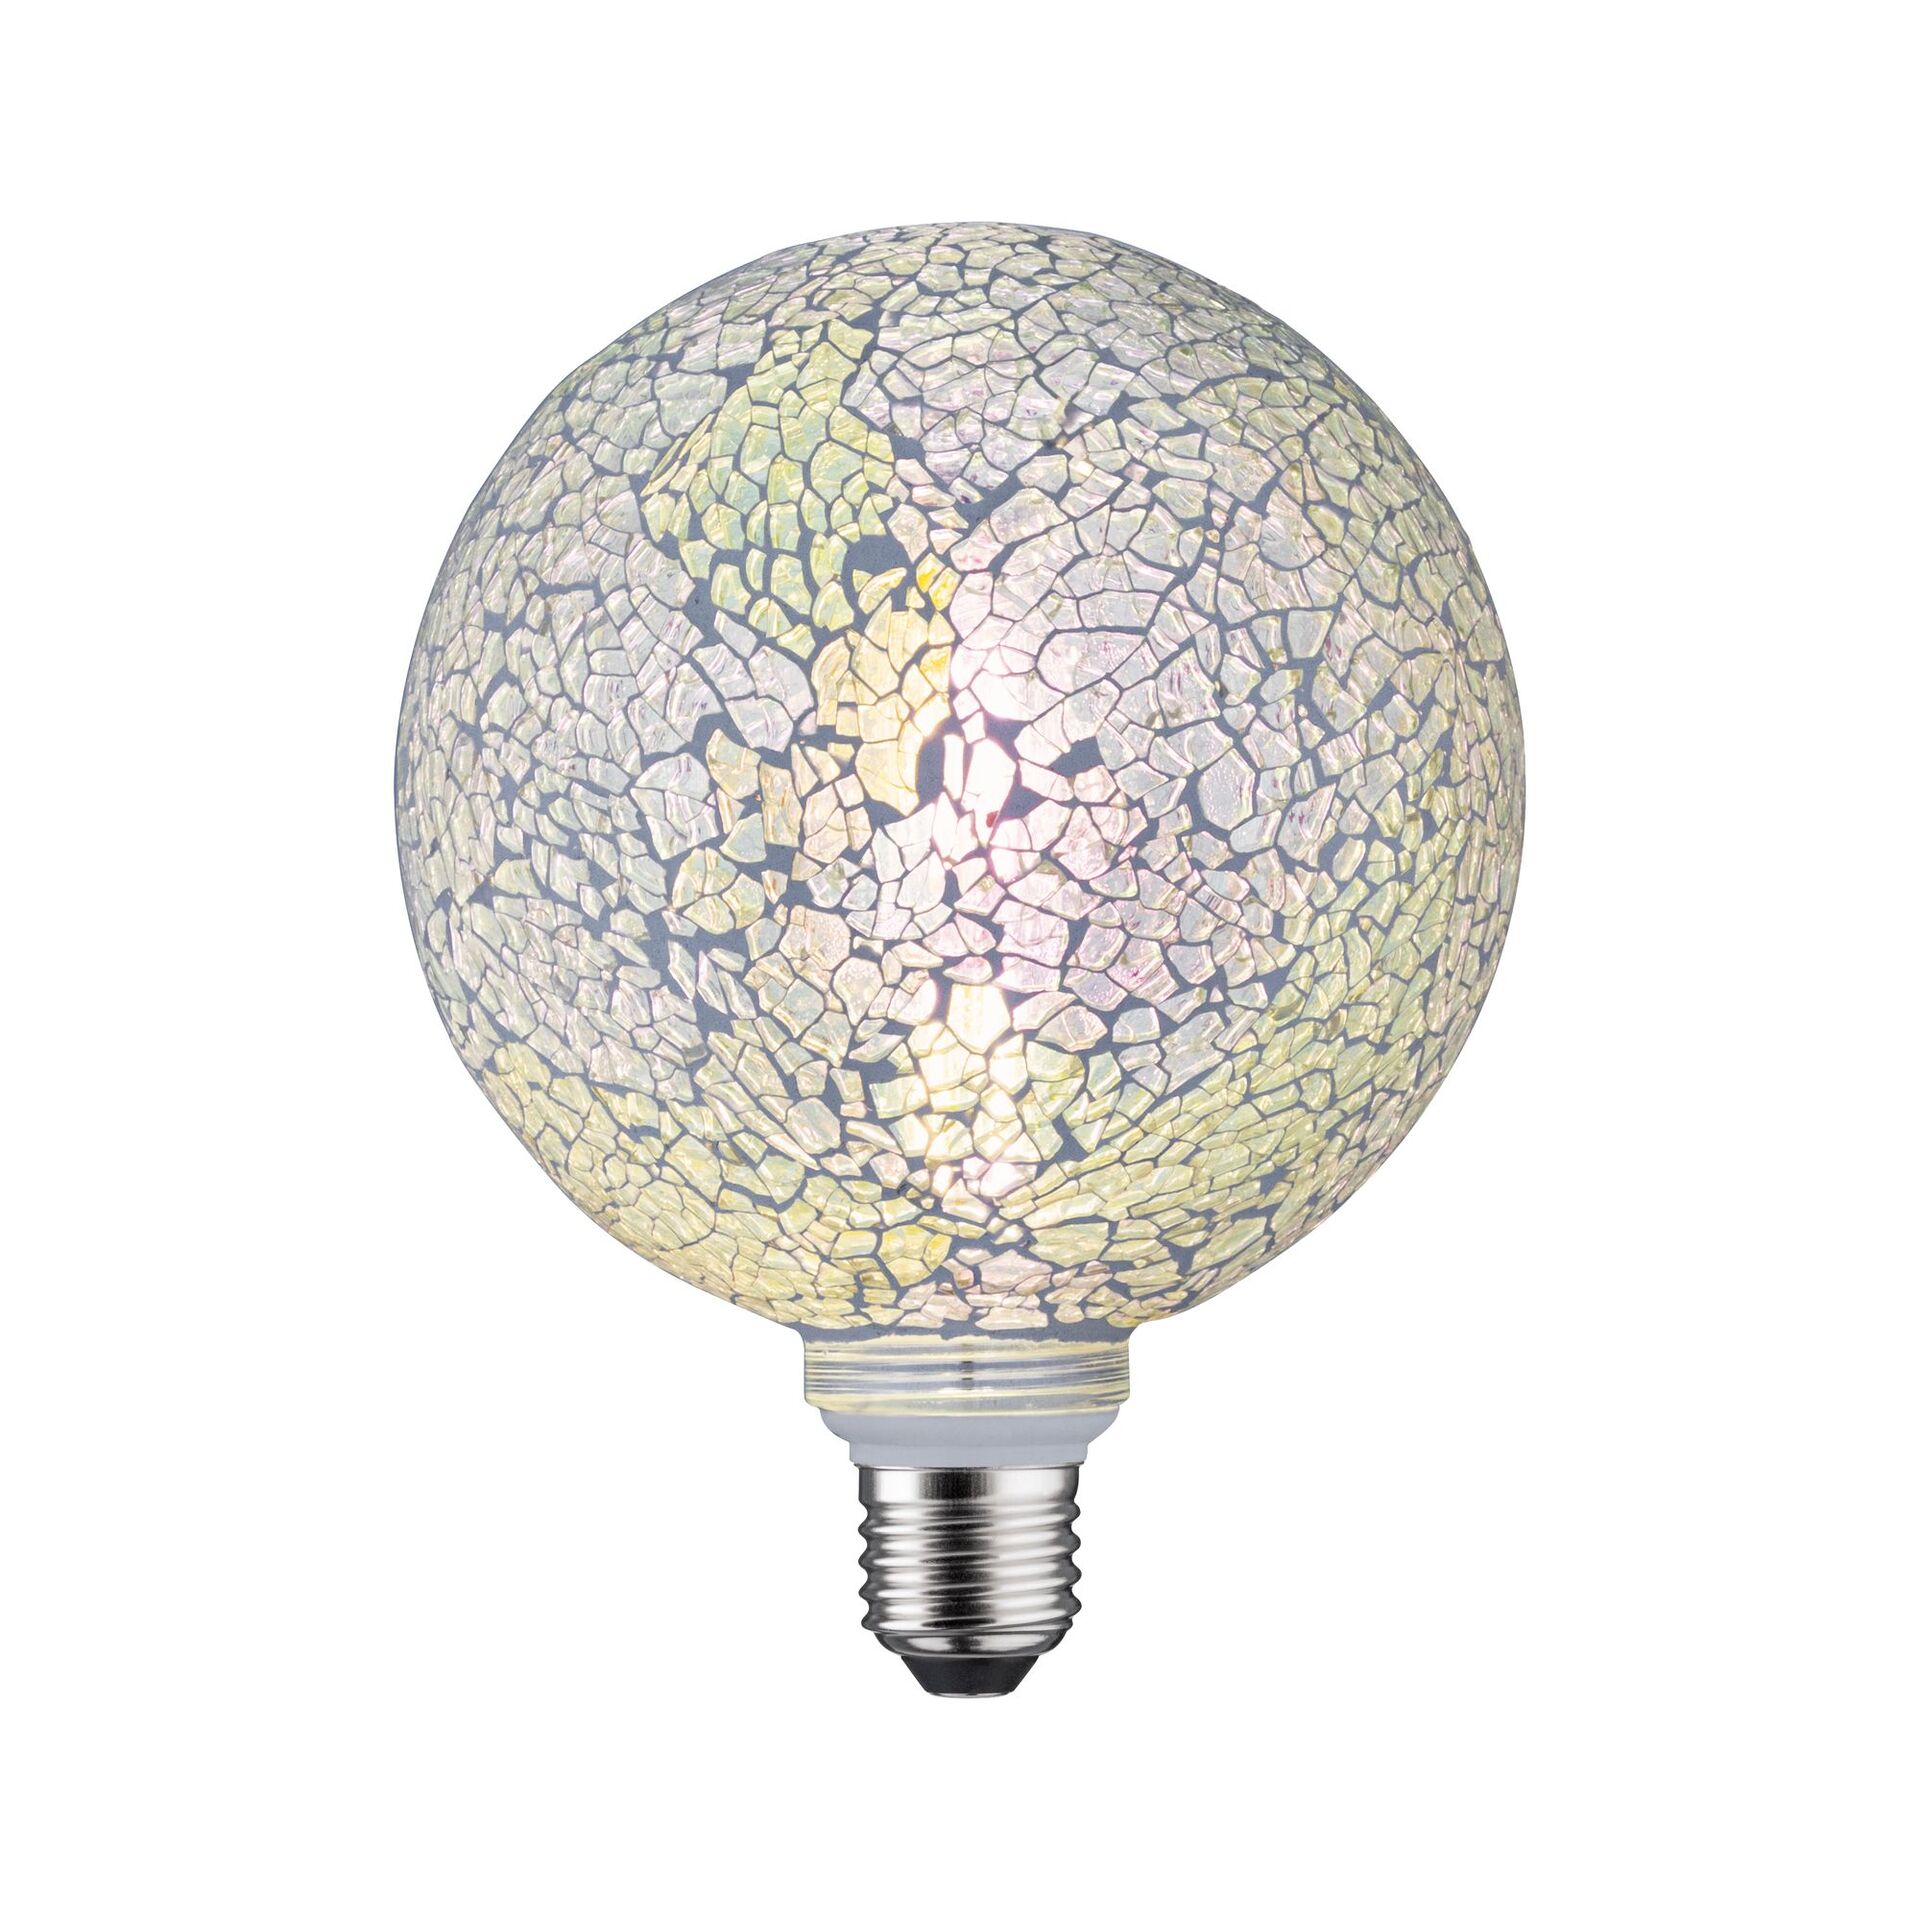 Miracle Mosaic Edition LED Globe